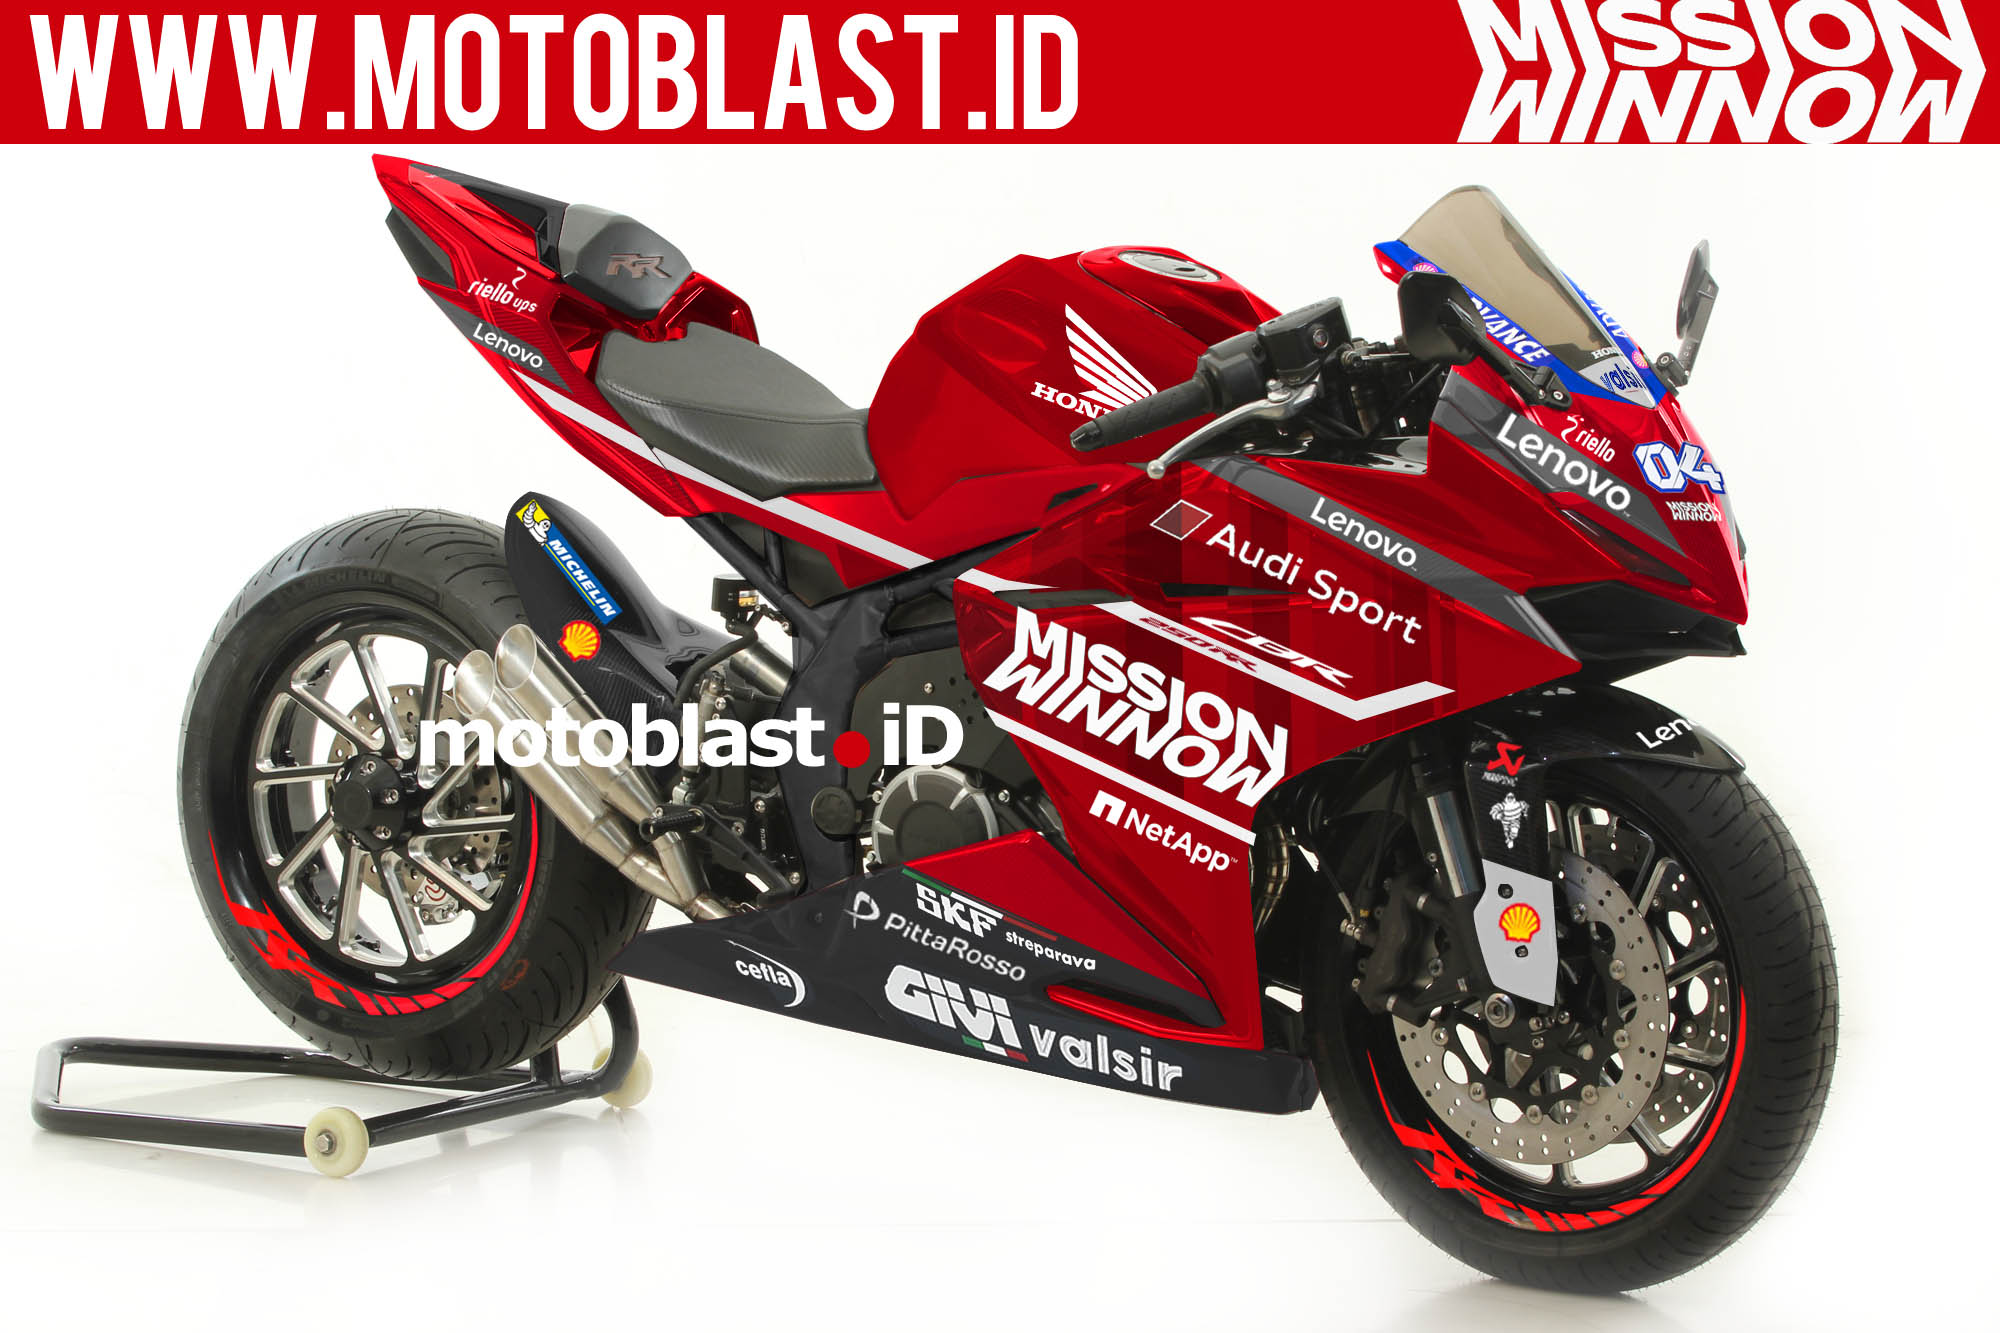 New Arrival Desain Stiker untuk Honda CBR250RR tema Ducati 